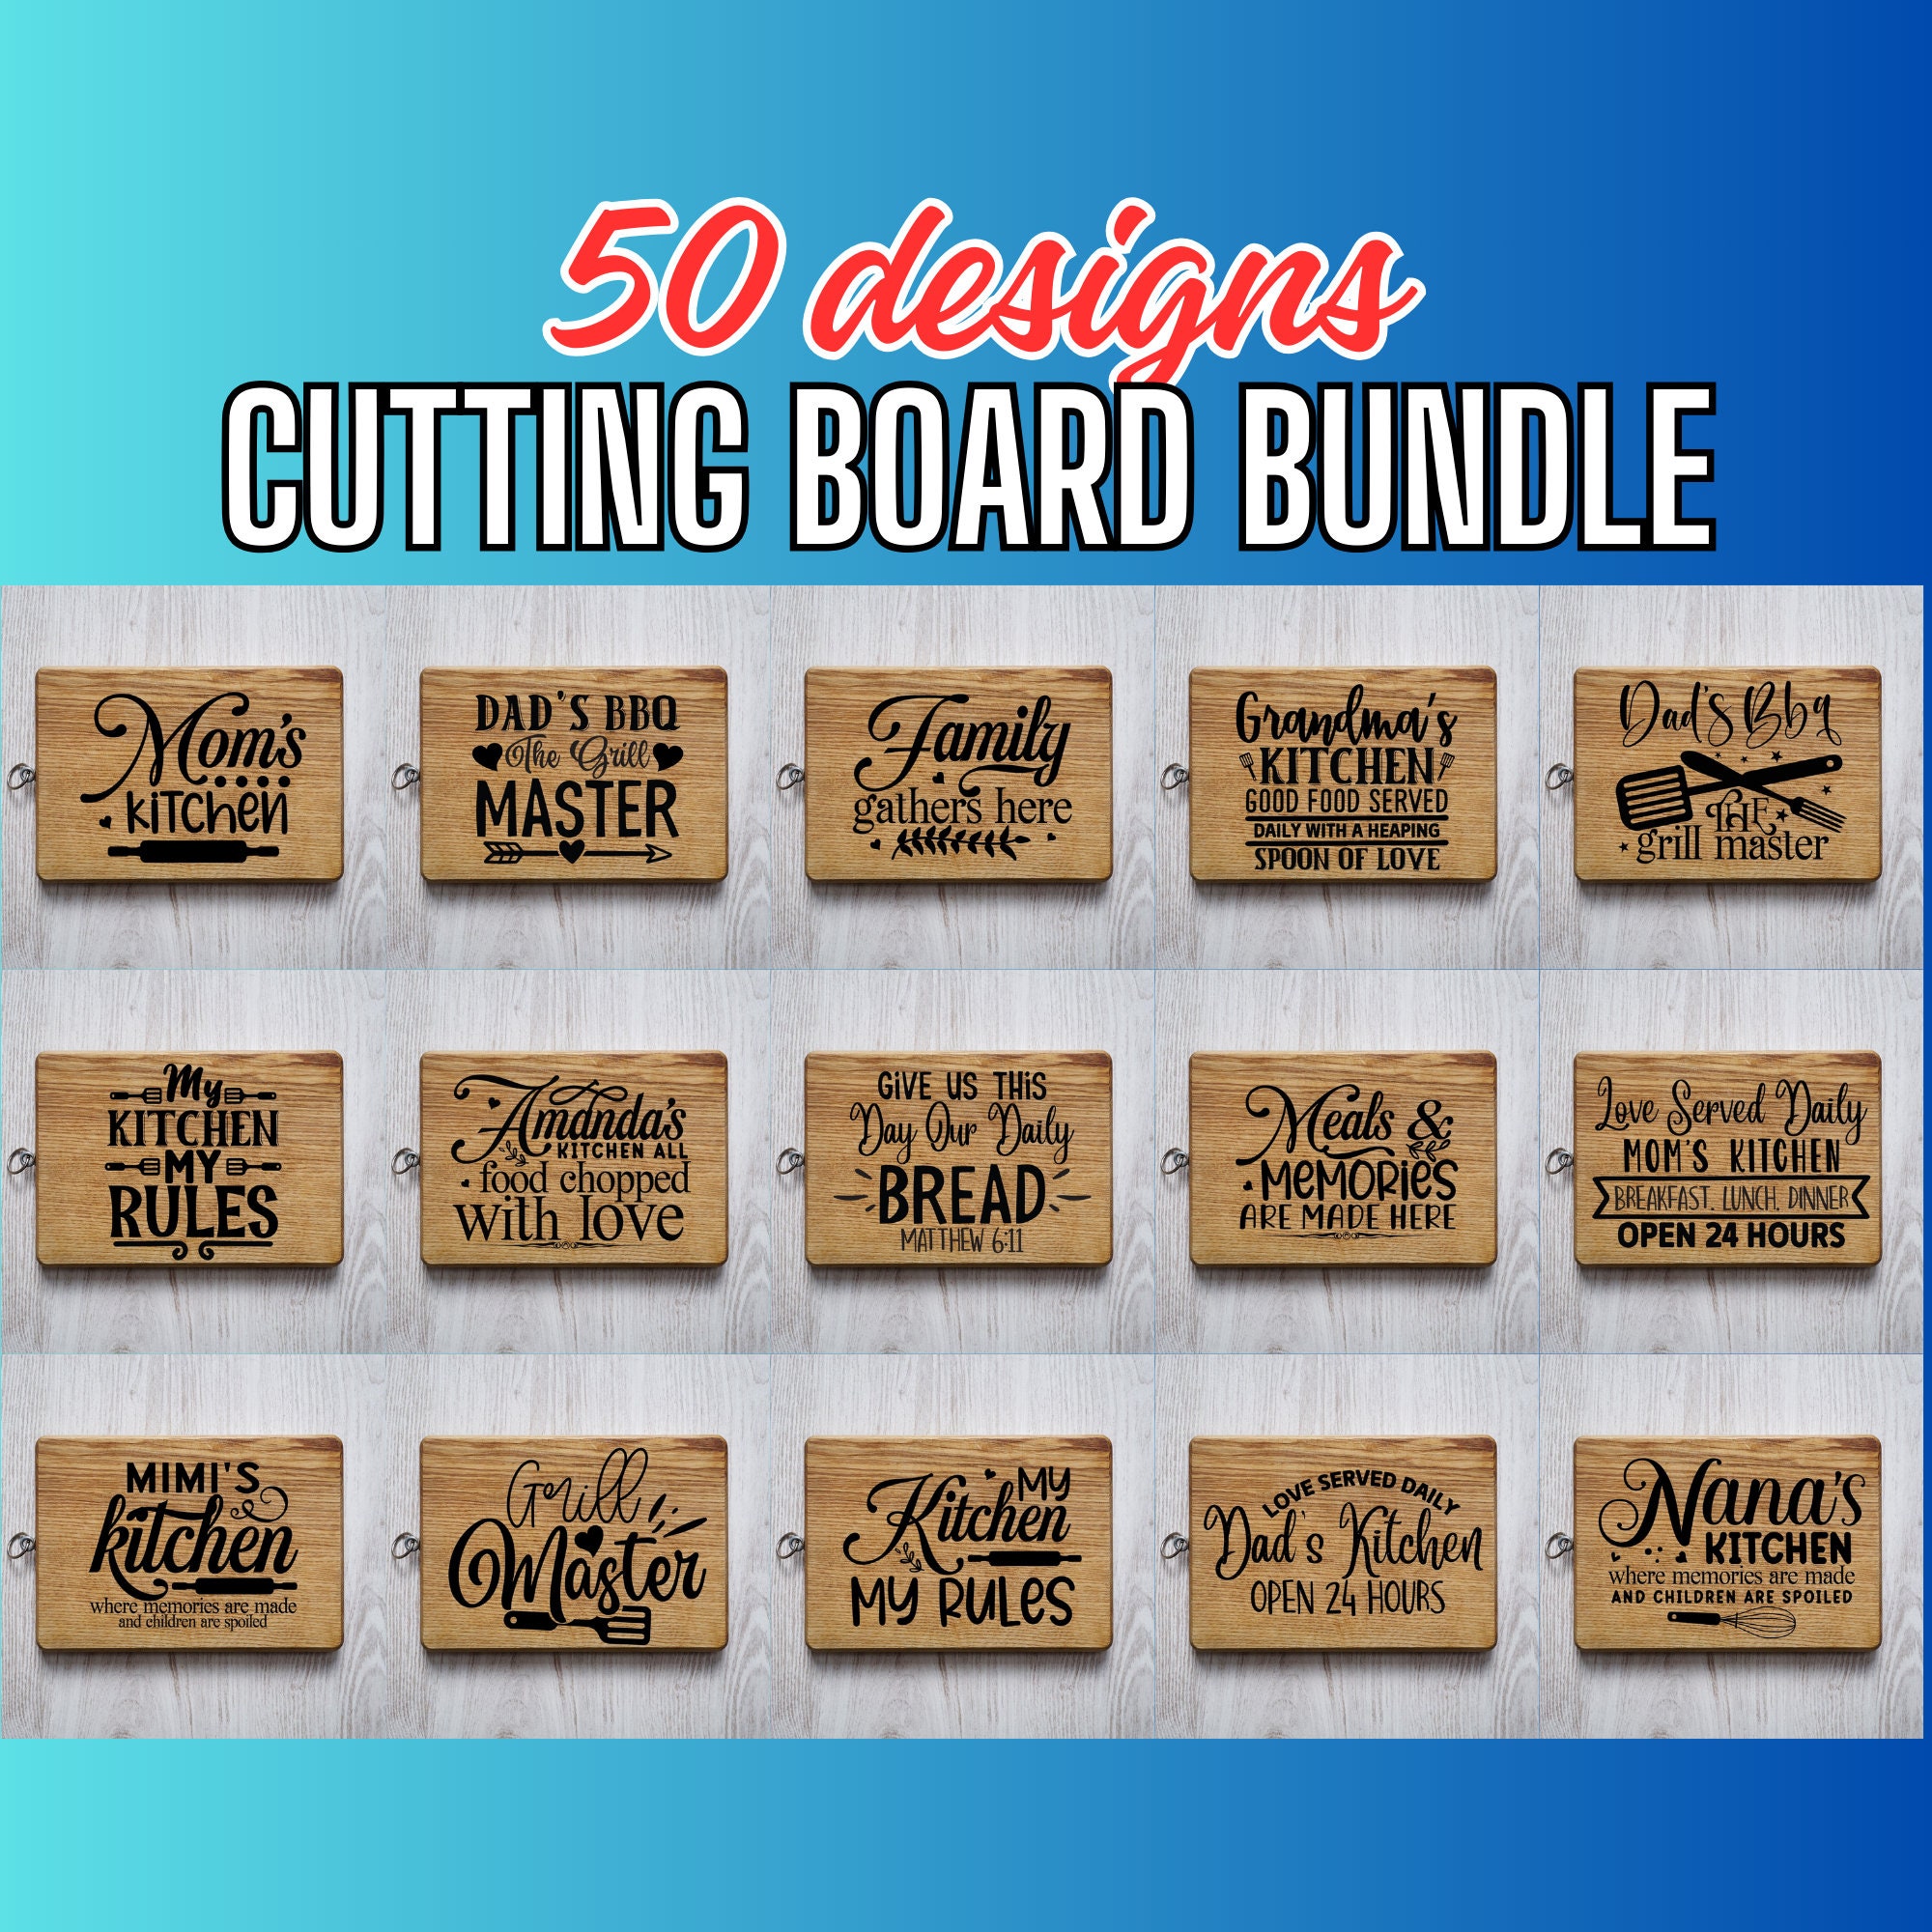 Cutting Board Svg Bundle, 50 Unique Designs, Files for Cricut, Silhouette,  Glowforge and More 